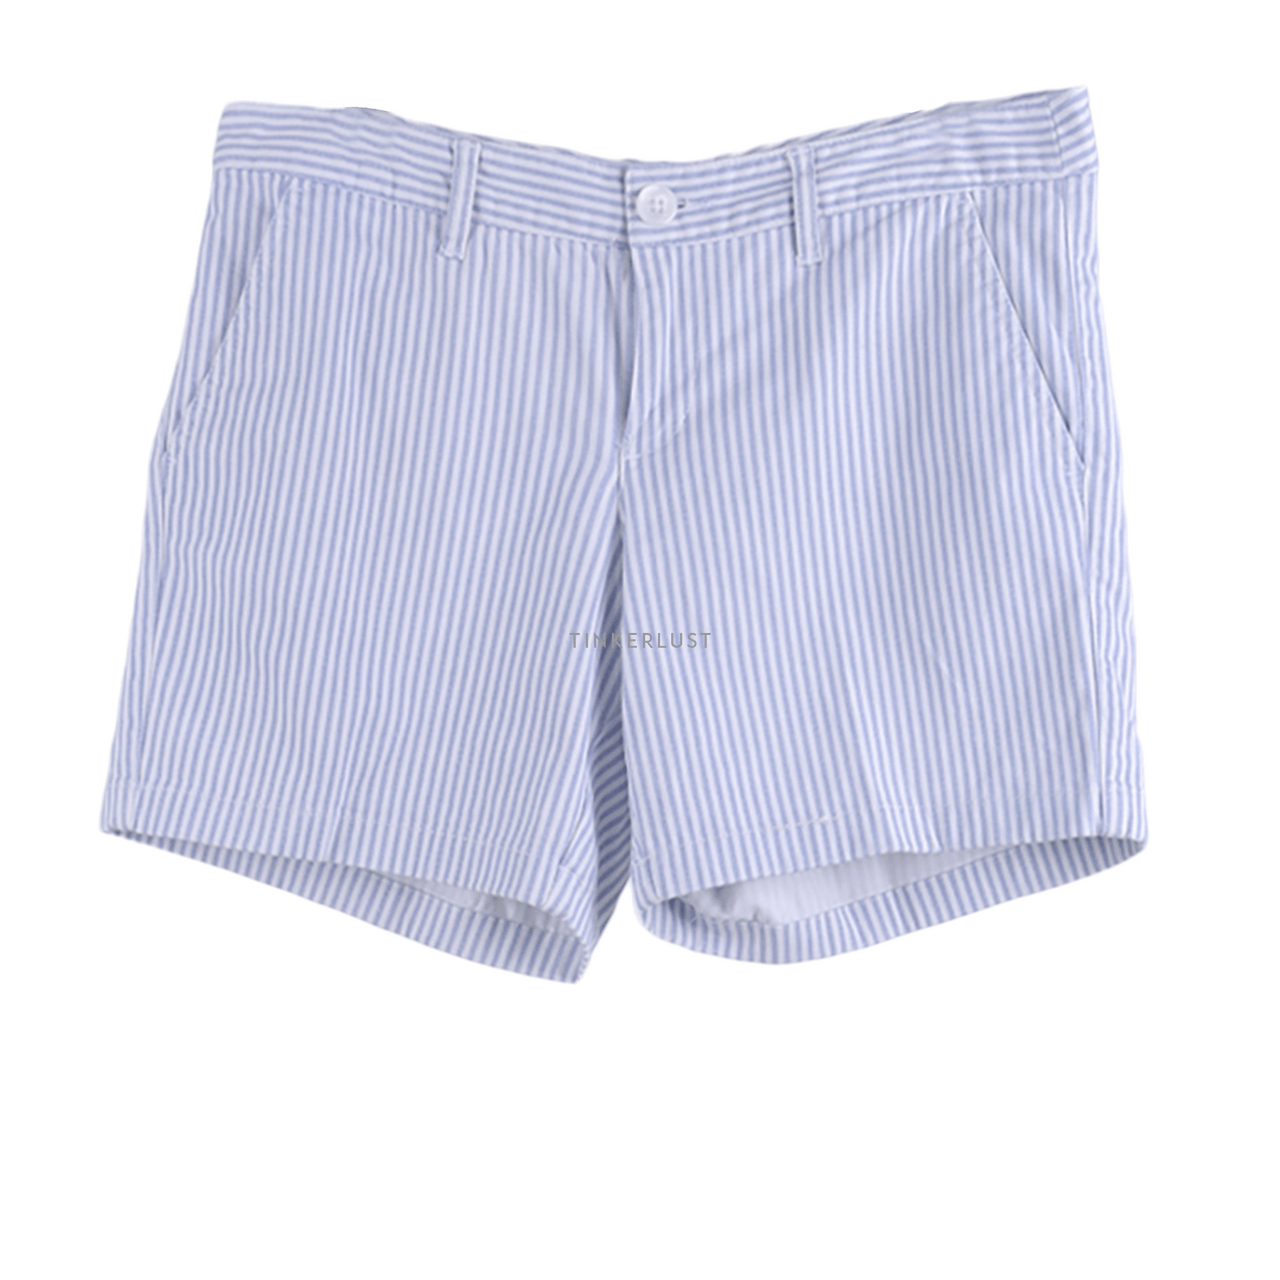 Giordano Blue & White Stripes Short Pants